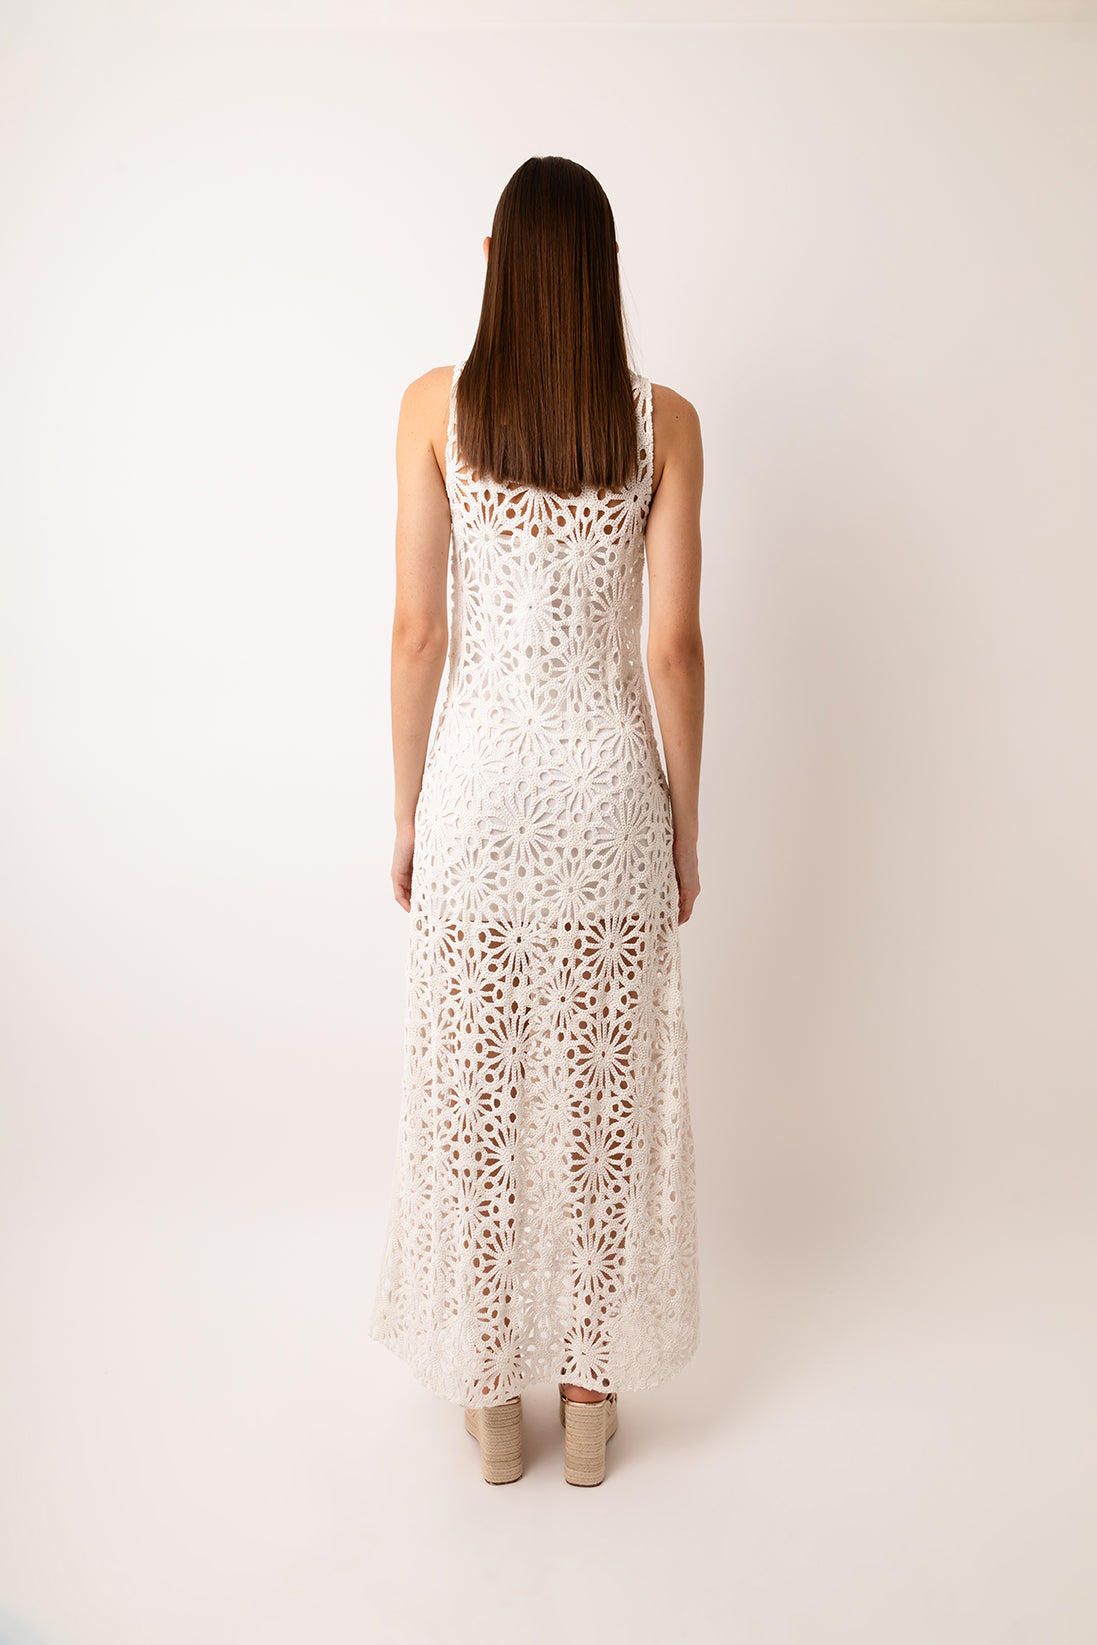 Sorrento White Crochet Lace Maxi Dress